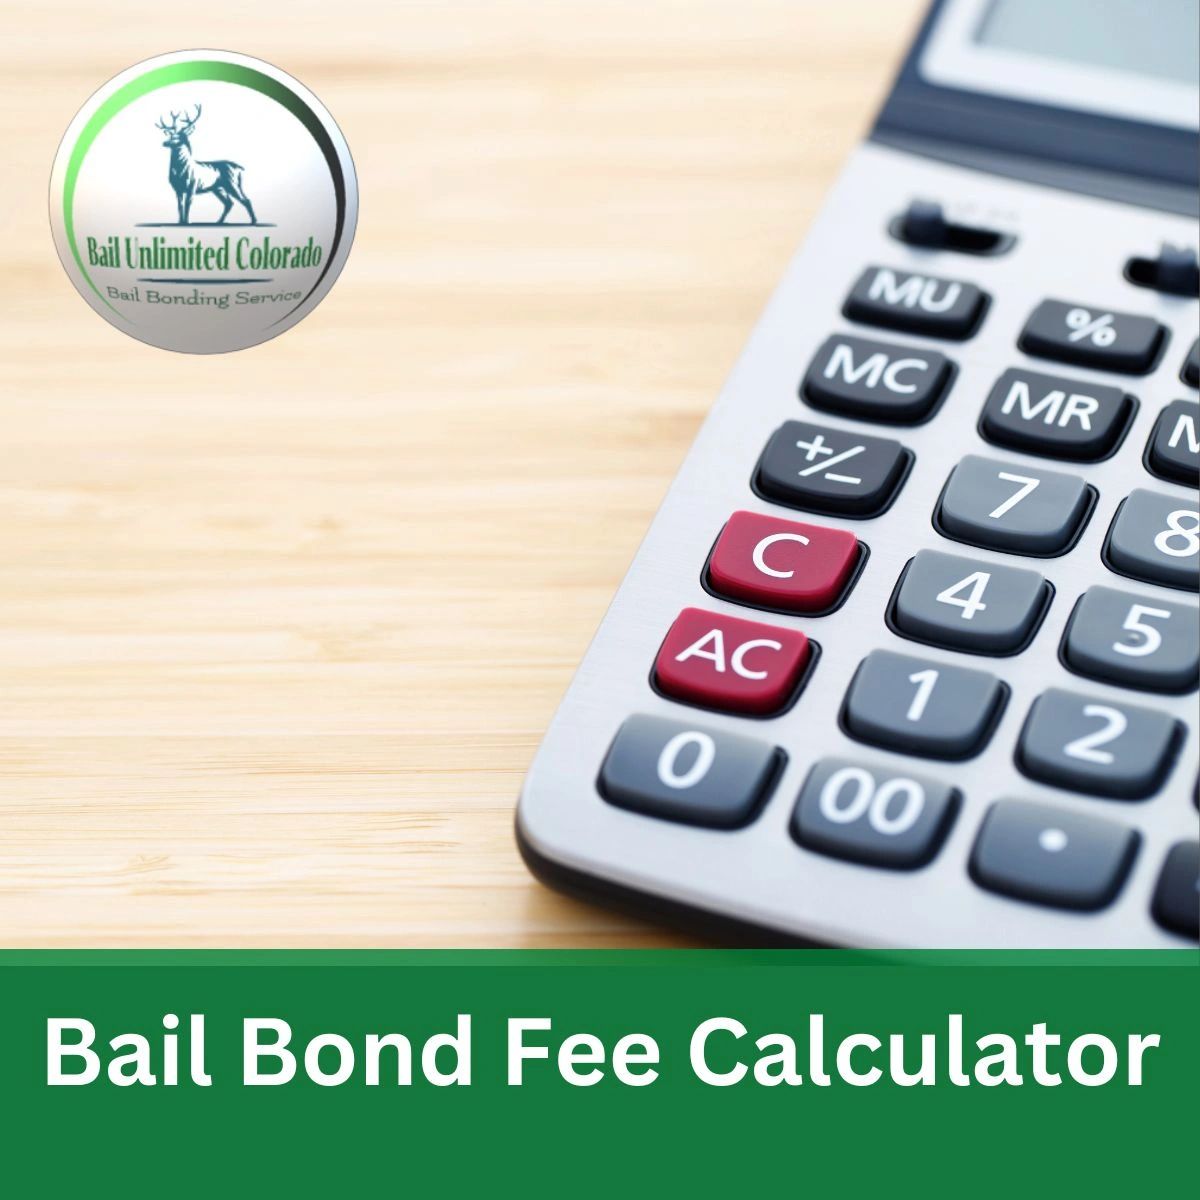 Bail Bond Fee Calculator - LOGO Bail Unlimited Colorado. County Jail Bail Electronic Calculator 